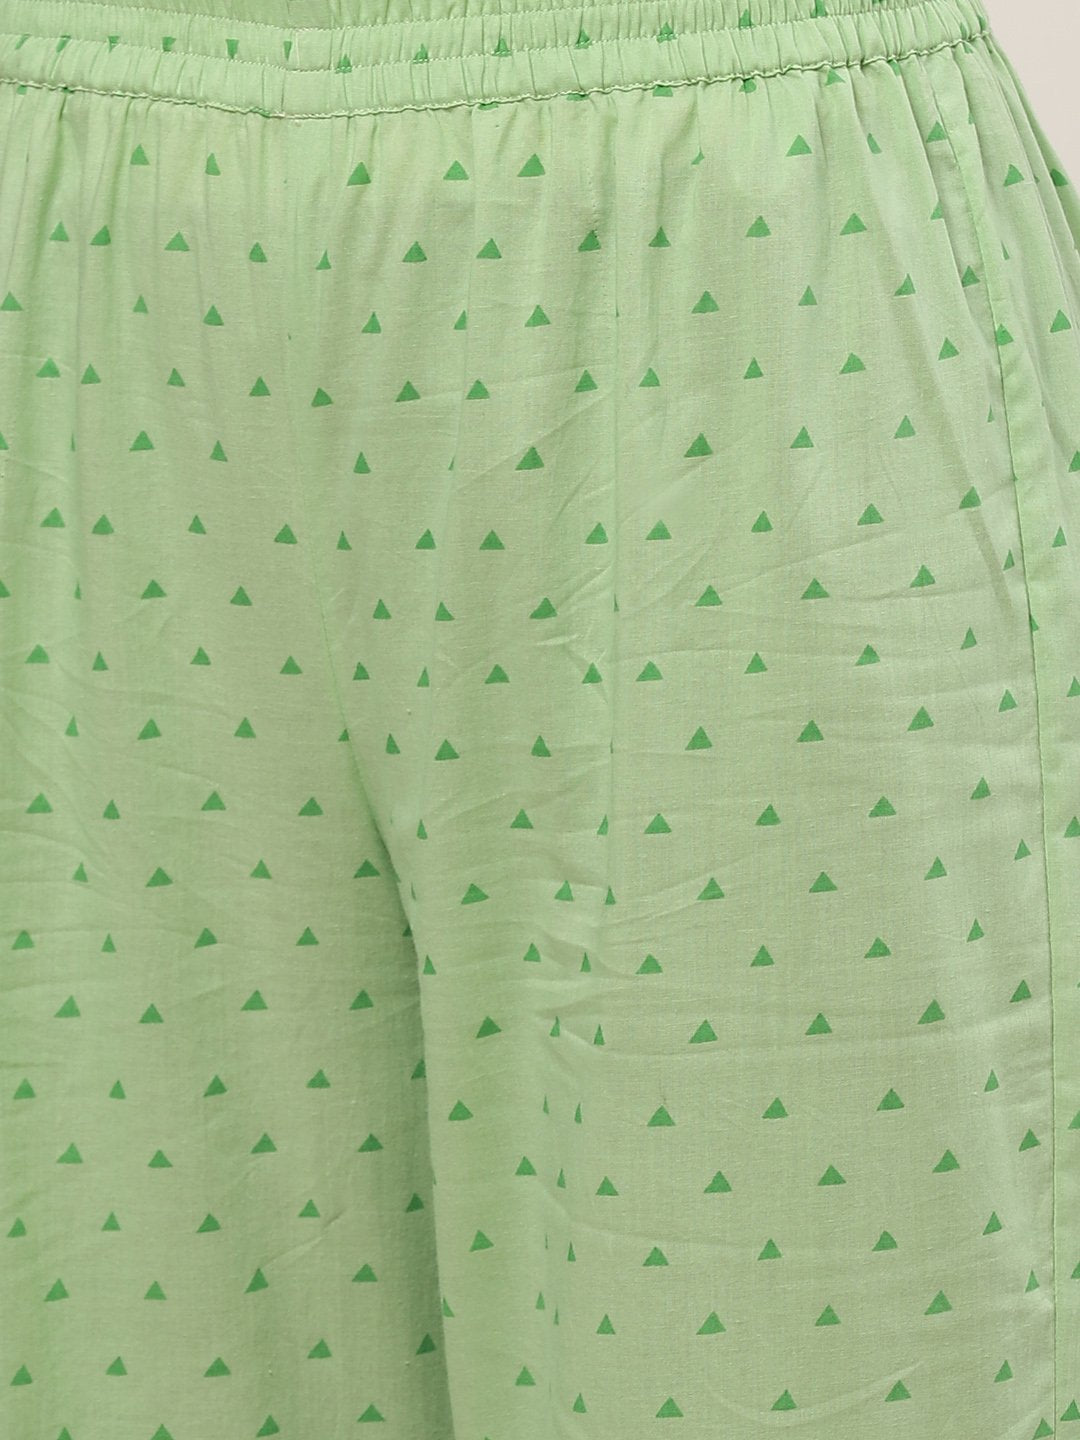 Women's Green Three-Quarter Sleeves Straight Kurta With Palazzo - Nayo Clothing